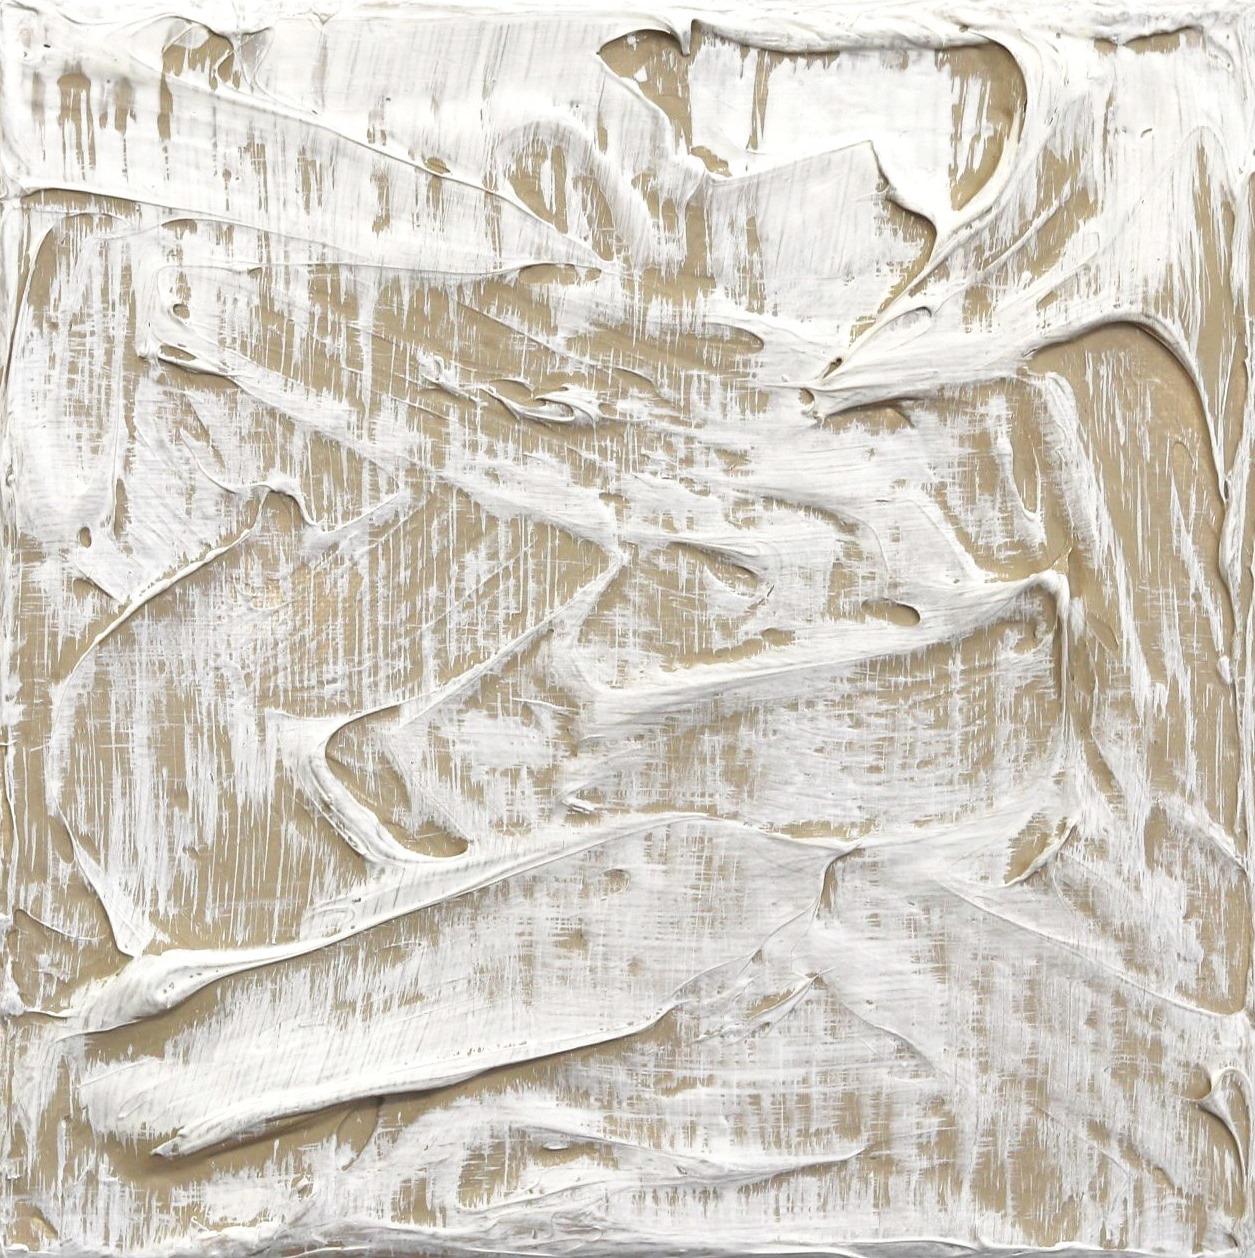 Len Klikunas Abstract Sculpture - Forces of Nature 2 - Sculptural Abstract Minimalist Textural Artwork on Canvas